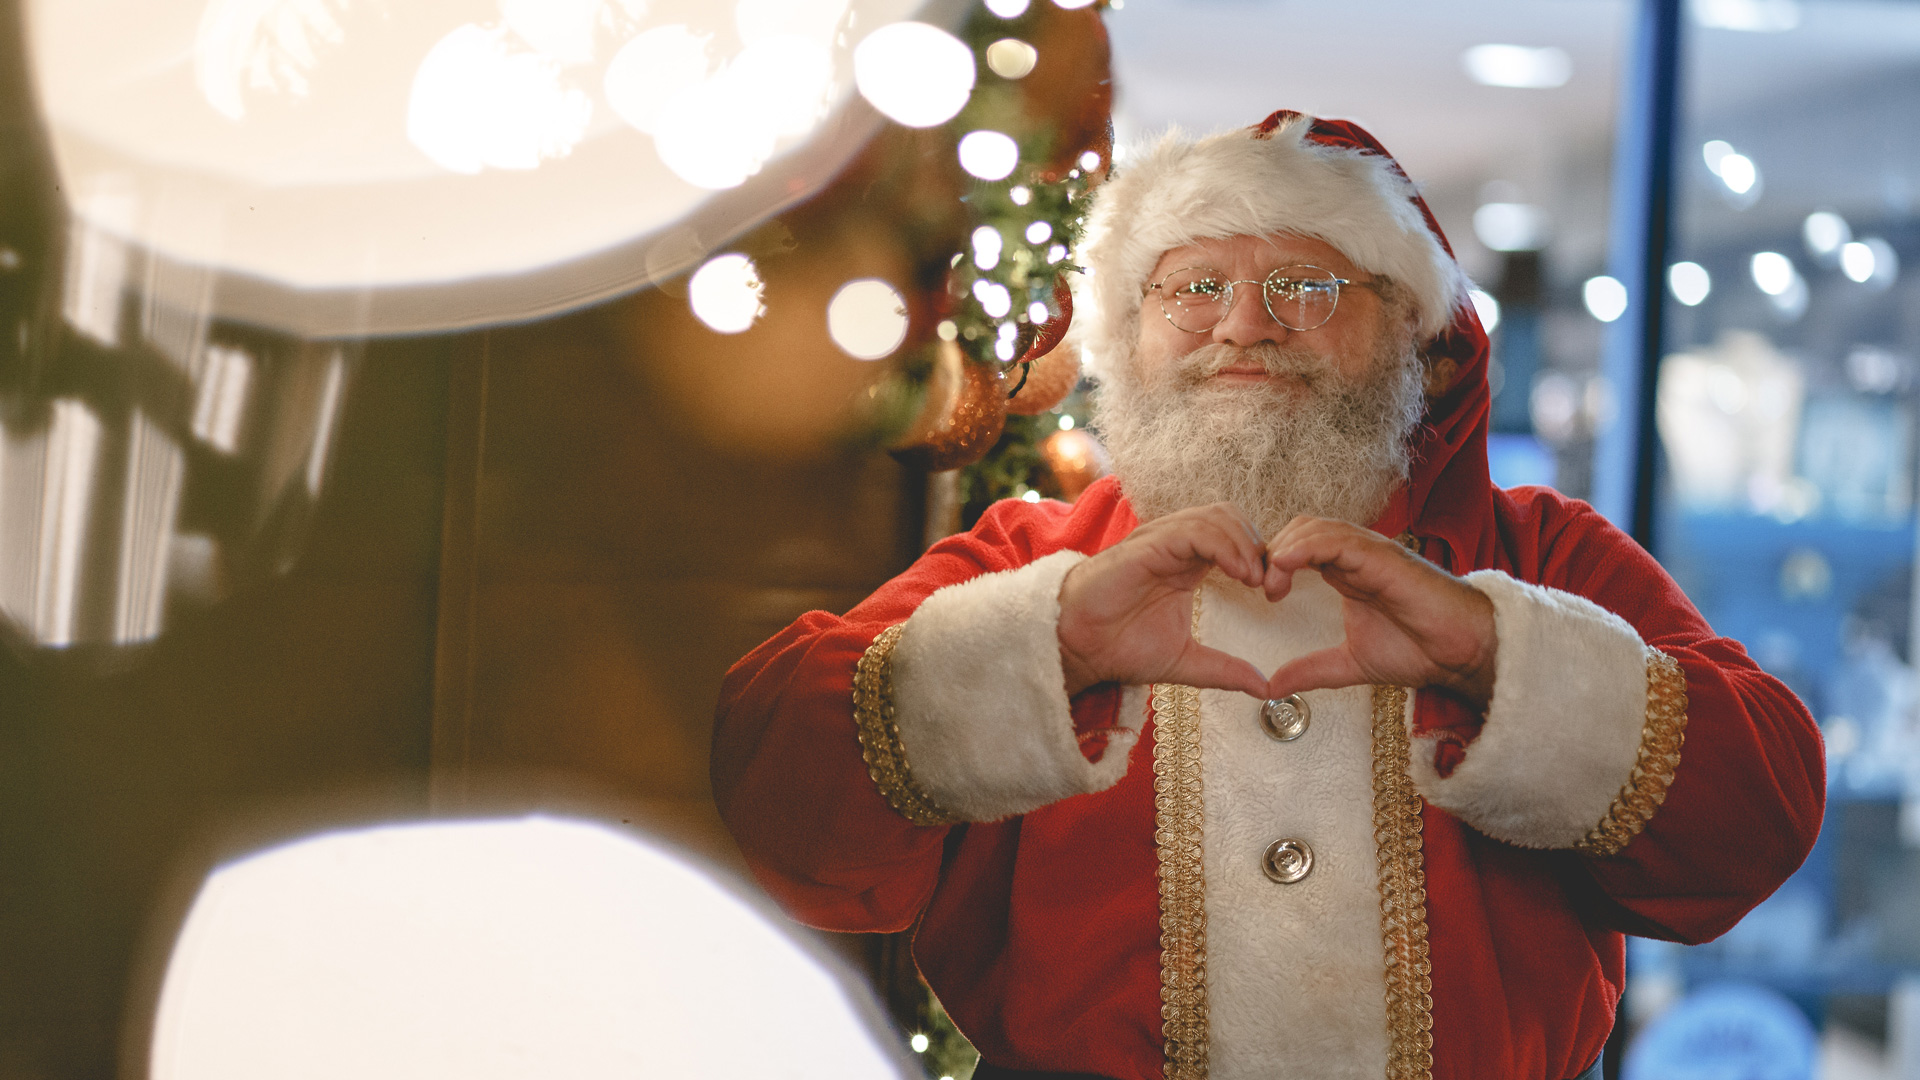 The Leadership Secrets of Santa Claus